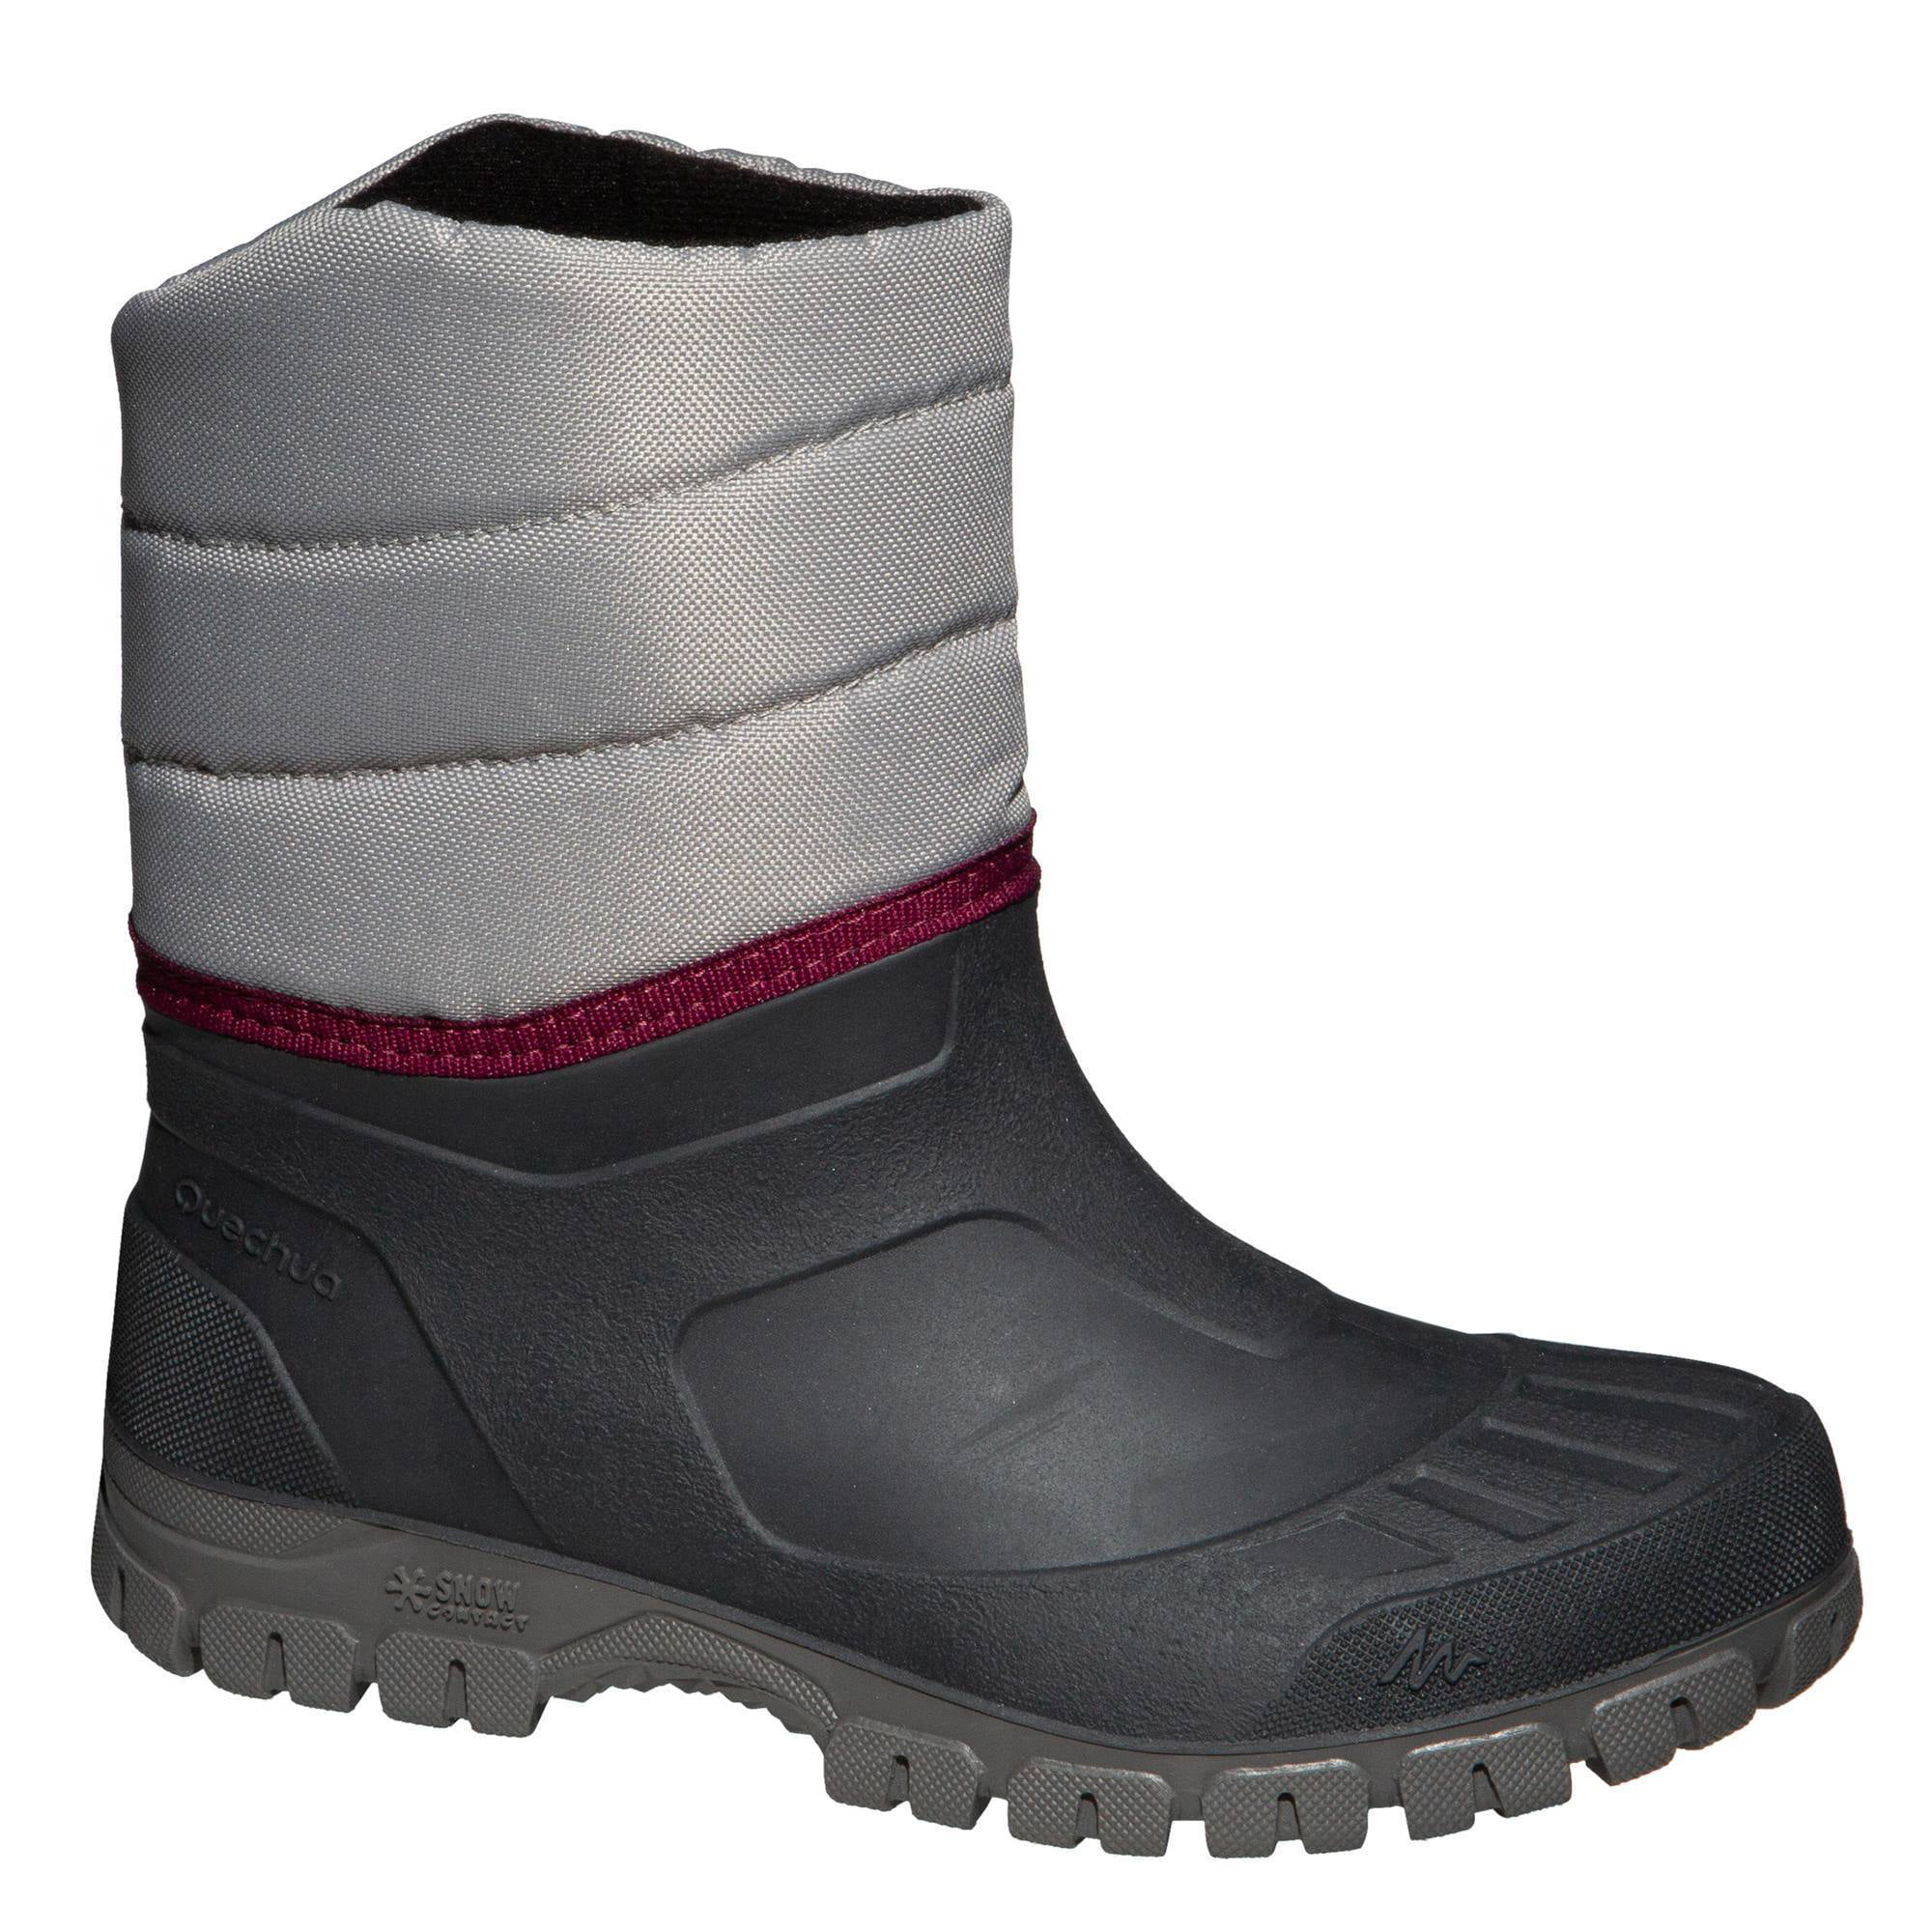 decathlon women's snow boots